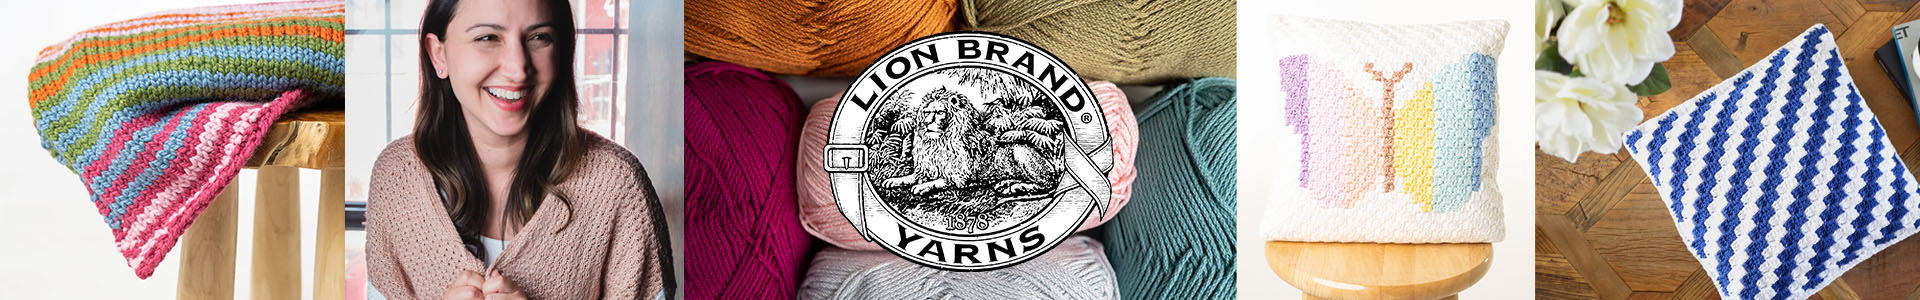 Lion Brand Yarn at JOANN